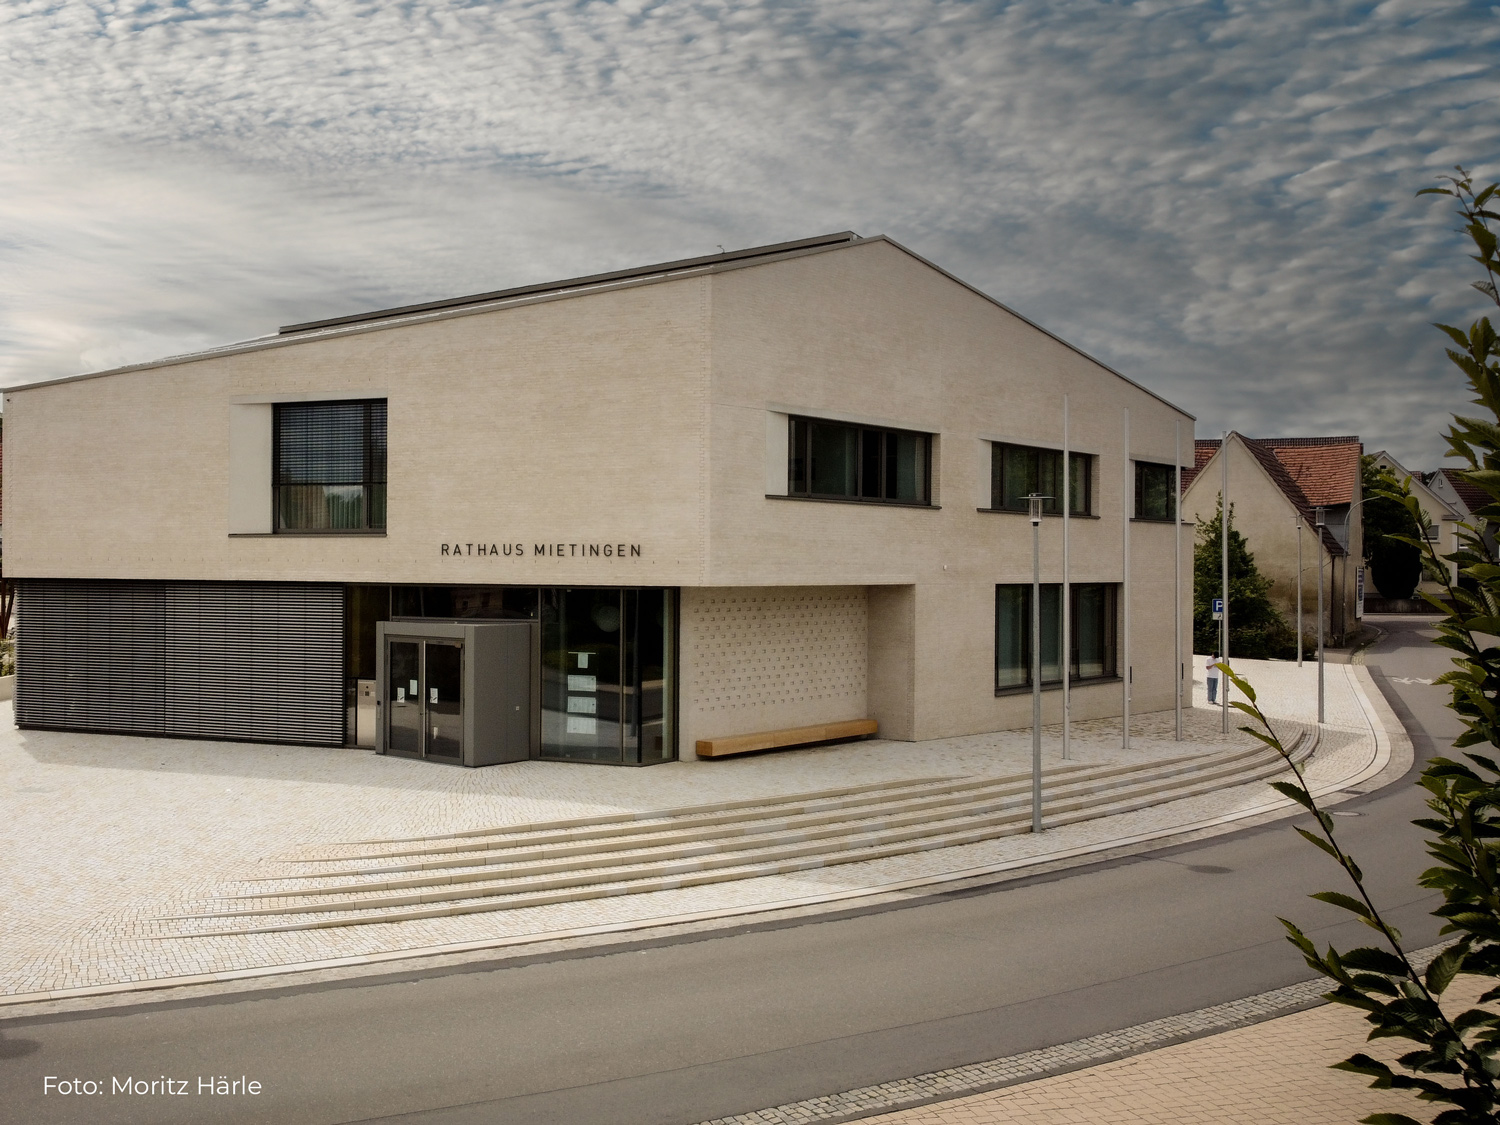 Mietingen | Neubau Rathaus